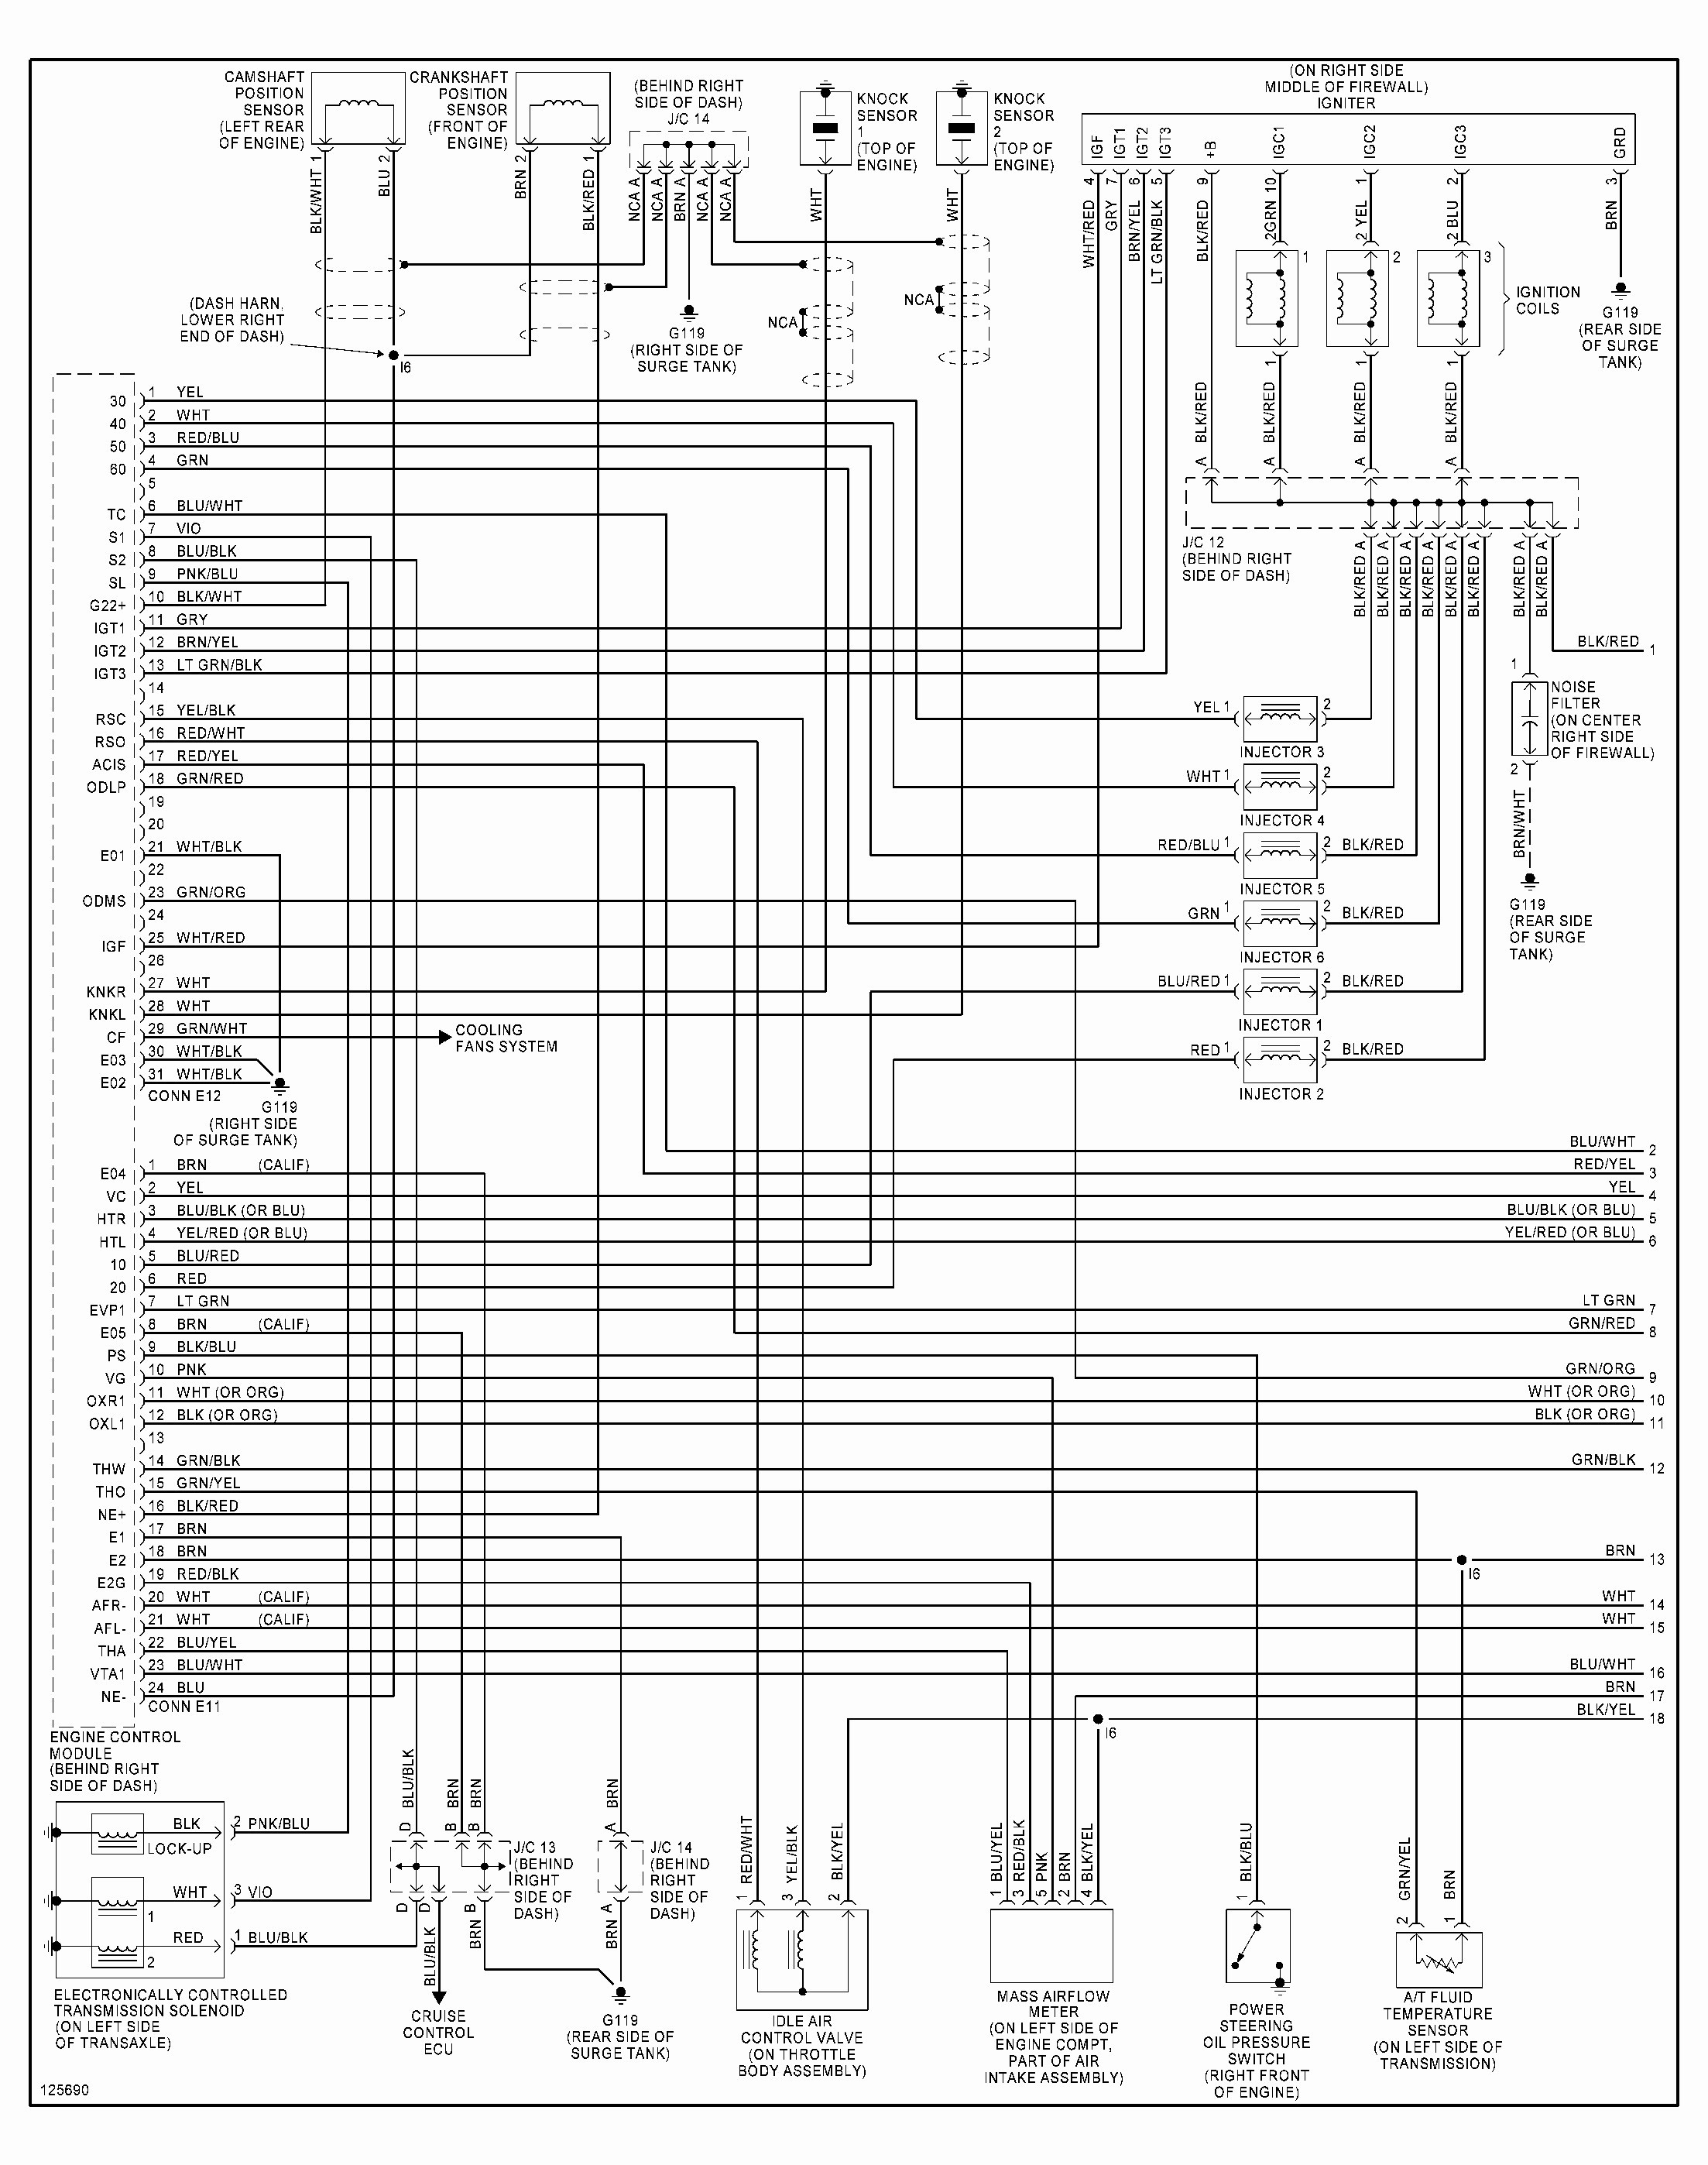 Toyota Wiring Diagram Abbreviations New Toyota Wiring Diagrams Fresh Fascinating Toyota Wiring Diagram